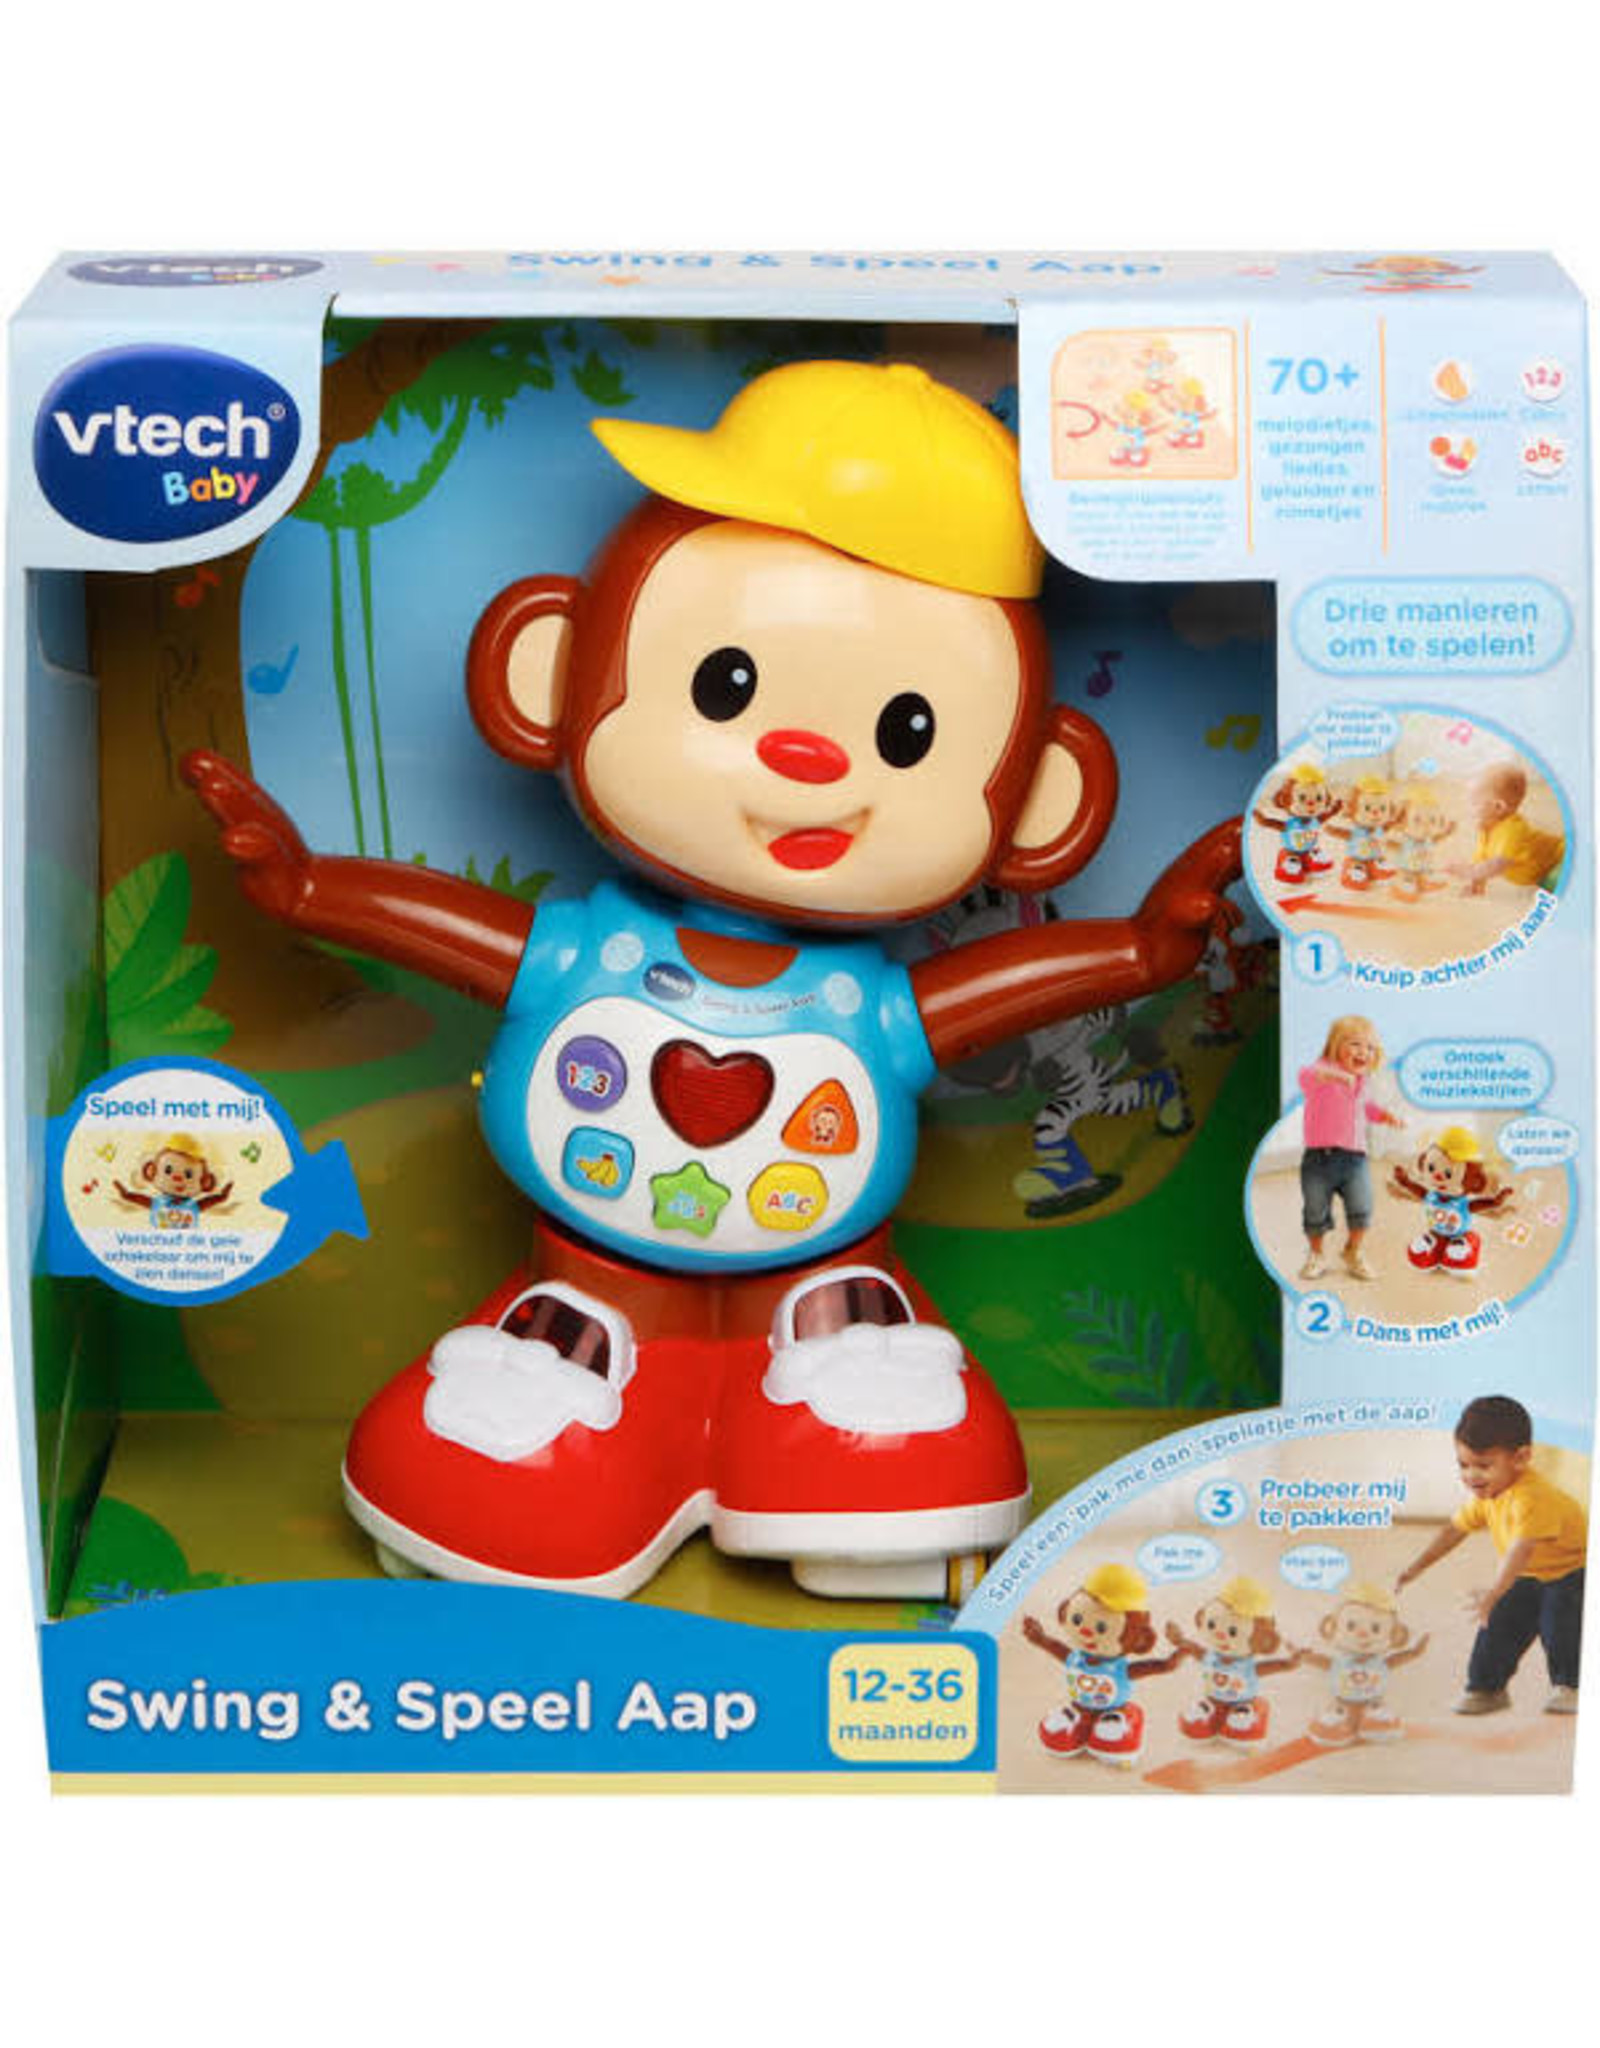 VTECH VTech Baby Swing & Speel Aap